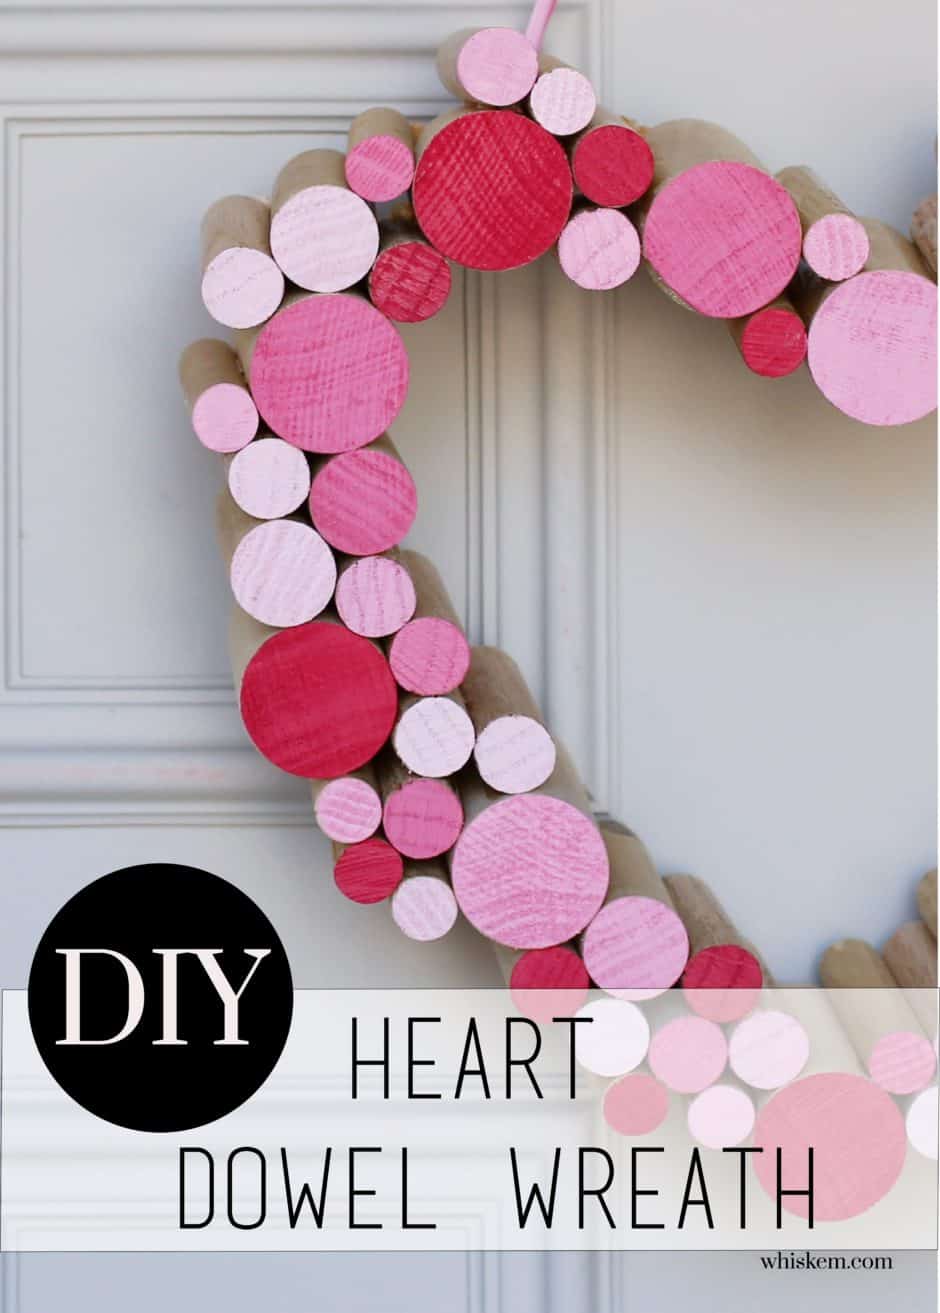 diy-heart-dowel-wreath-v-day-pin